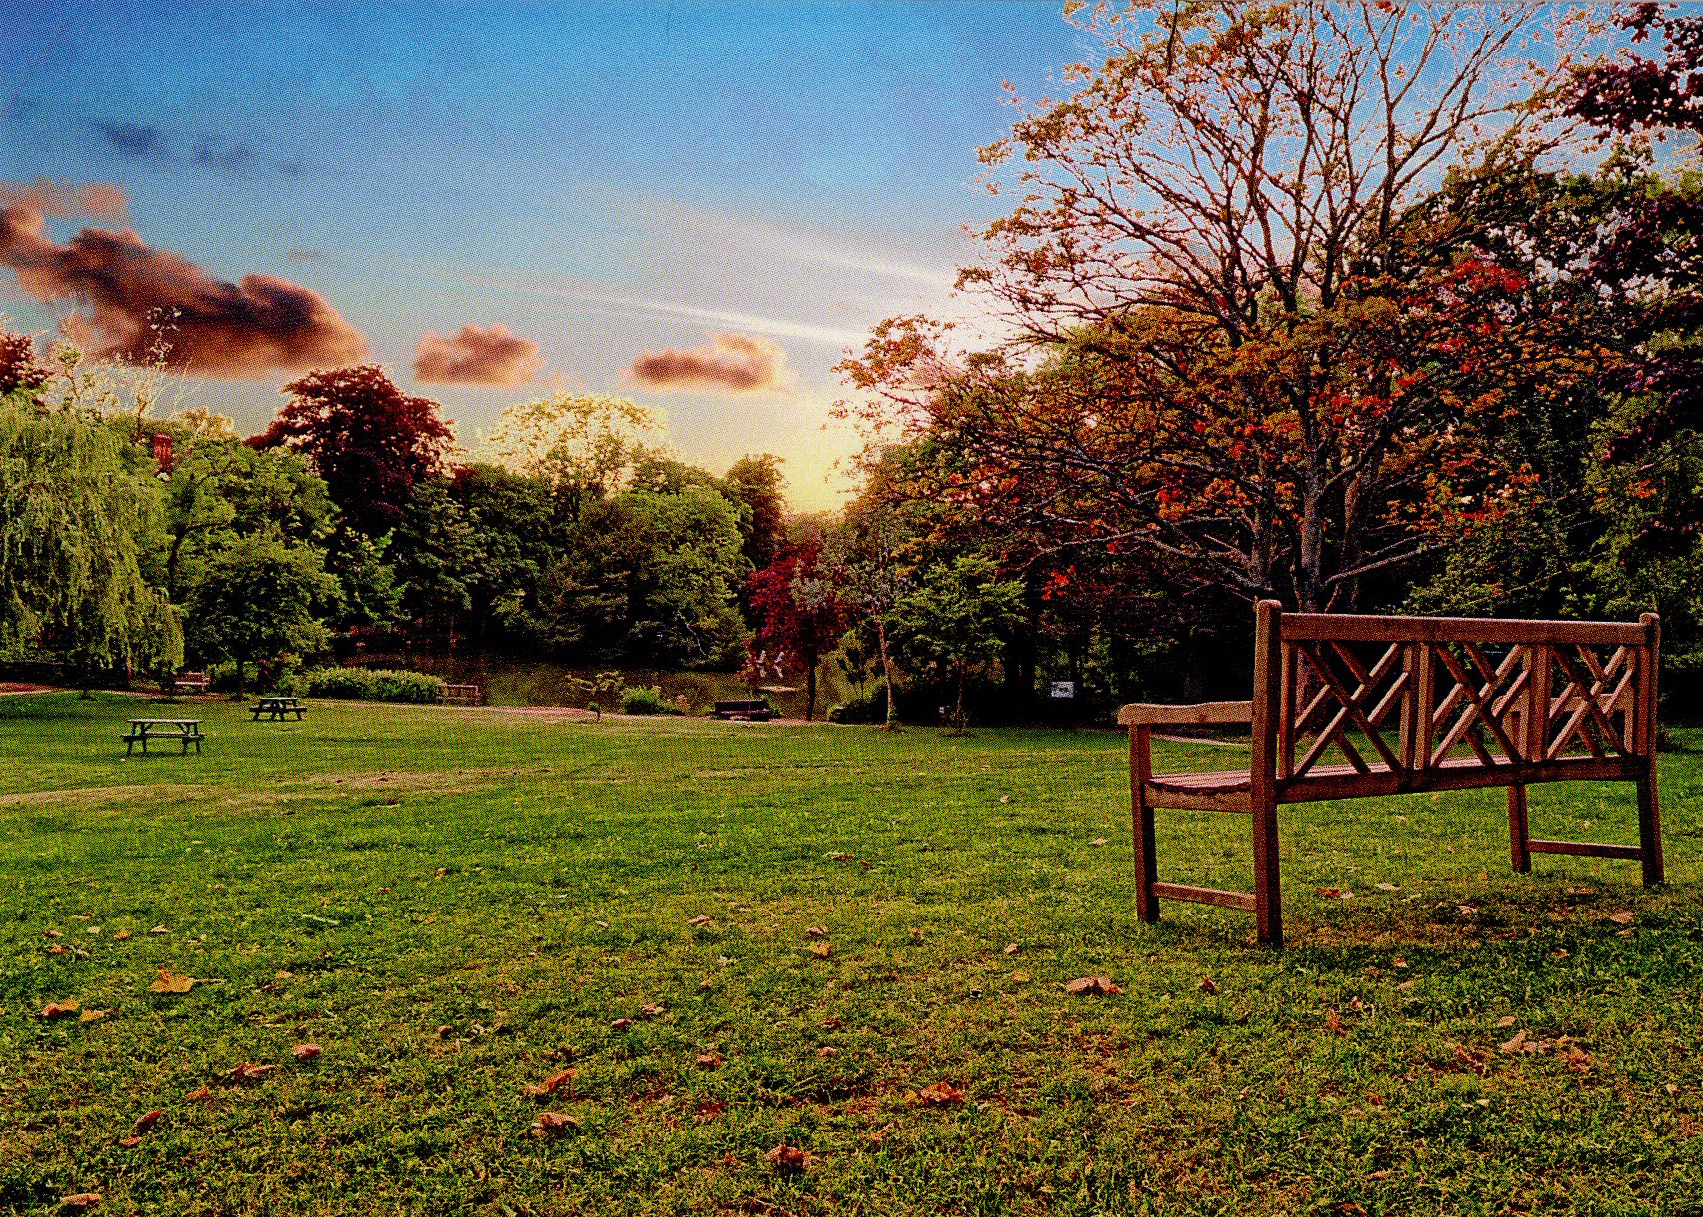 Owen de Visser – Moseley Park Bench